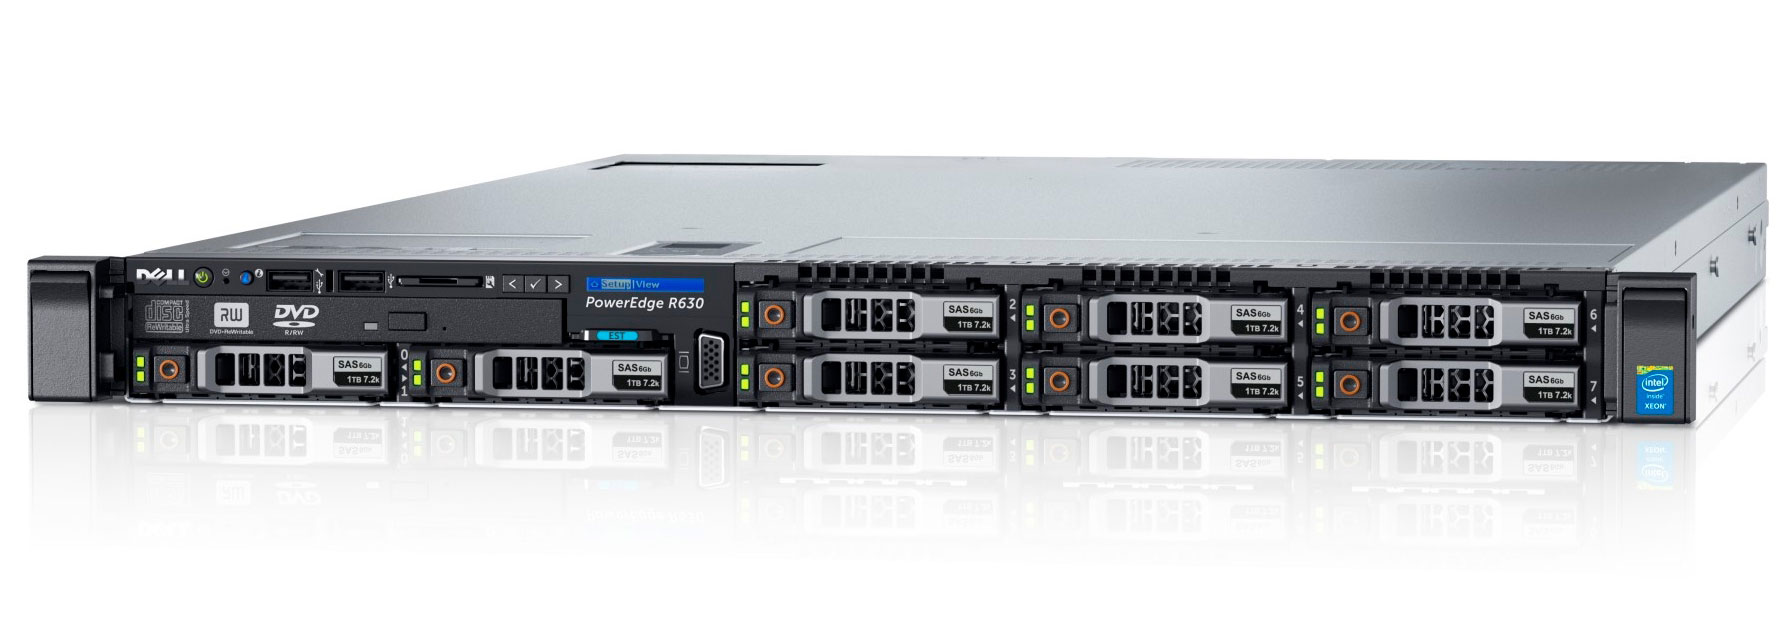 Подробное фото Сервер DELL PowerEdge R630 2x Xeon E5-2620v3 64Gb 2133P DDR4 8x noHDD 2.5" SAS RAID Perc H730, 1024Mb, DVD, 2*PSU